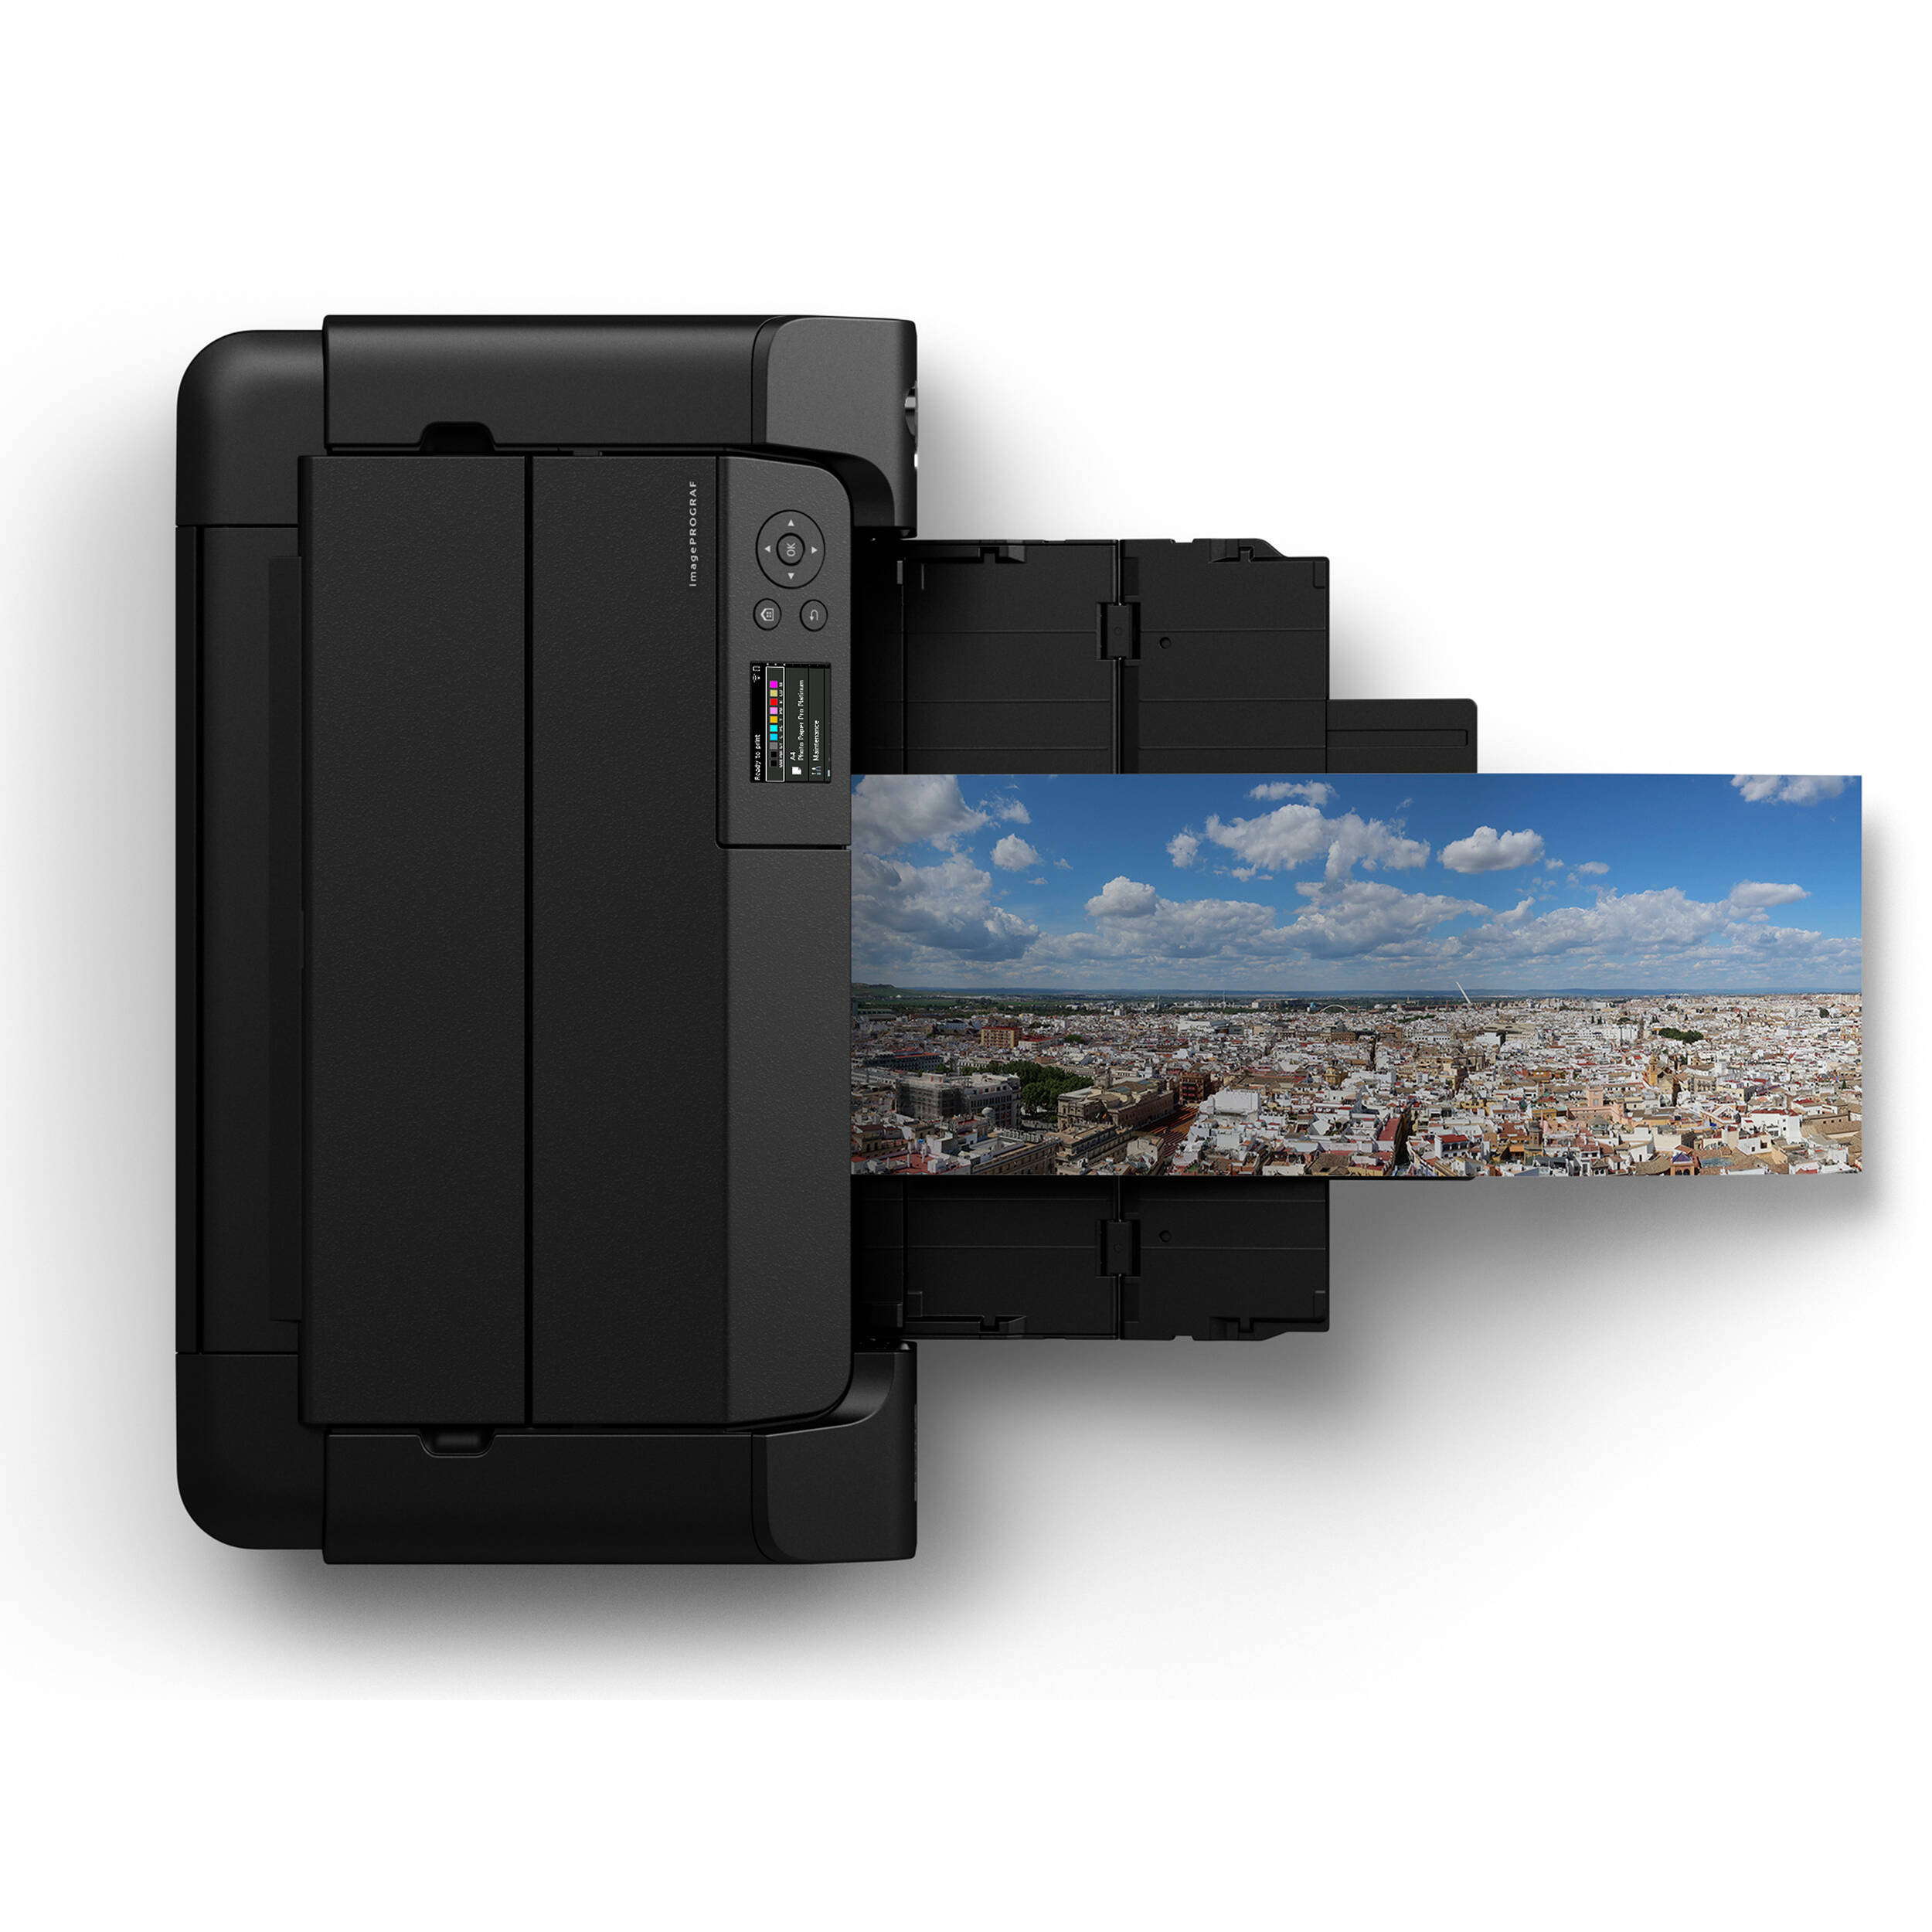 Imprimante Canon ImagePrograf Pro 300